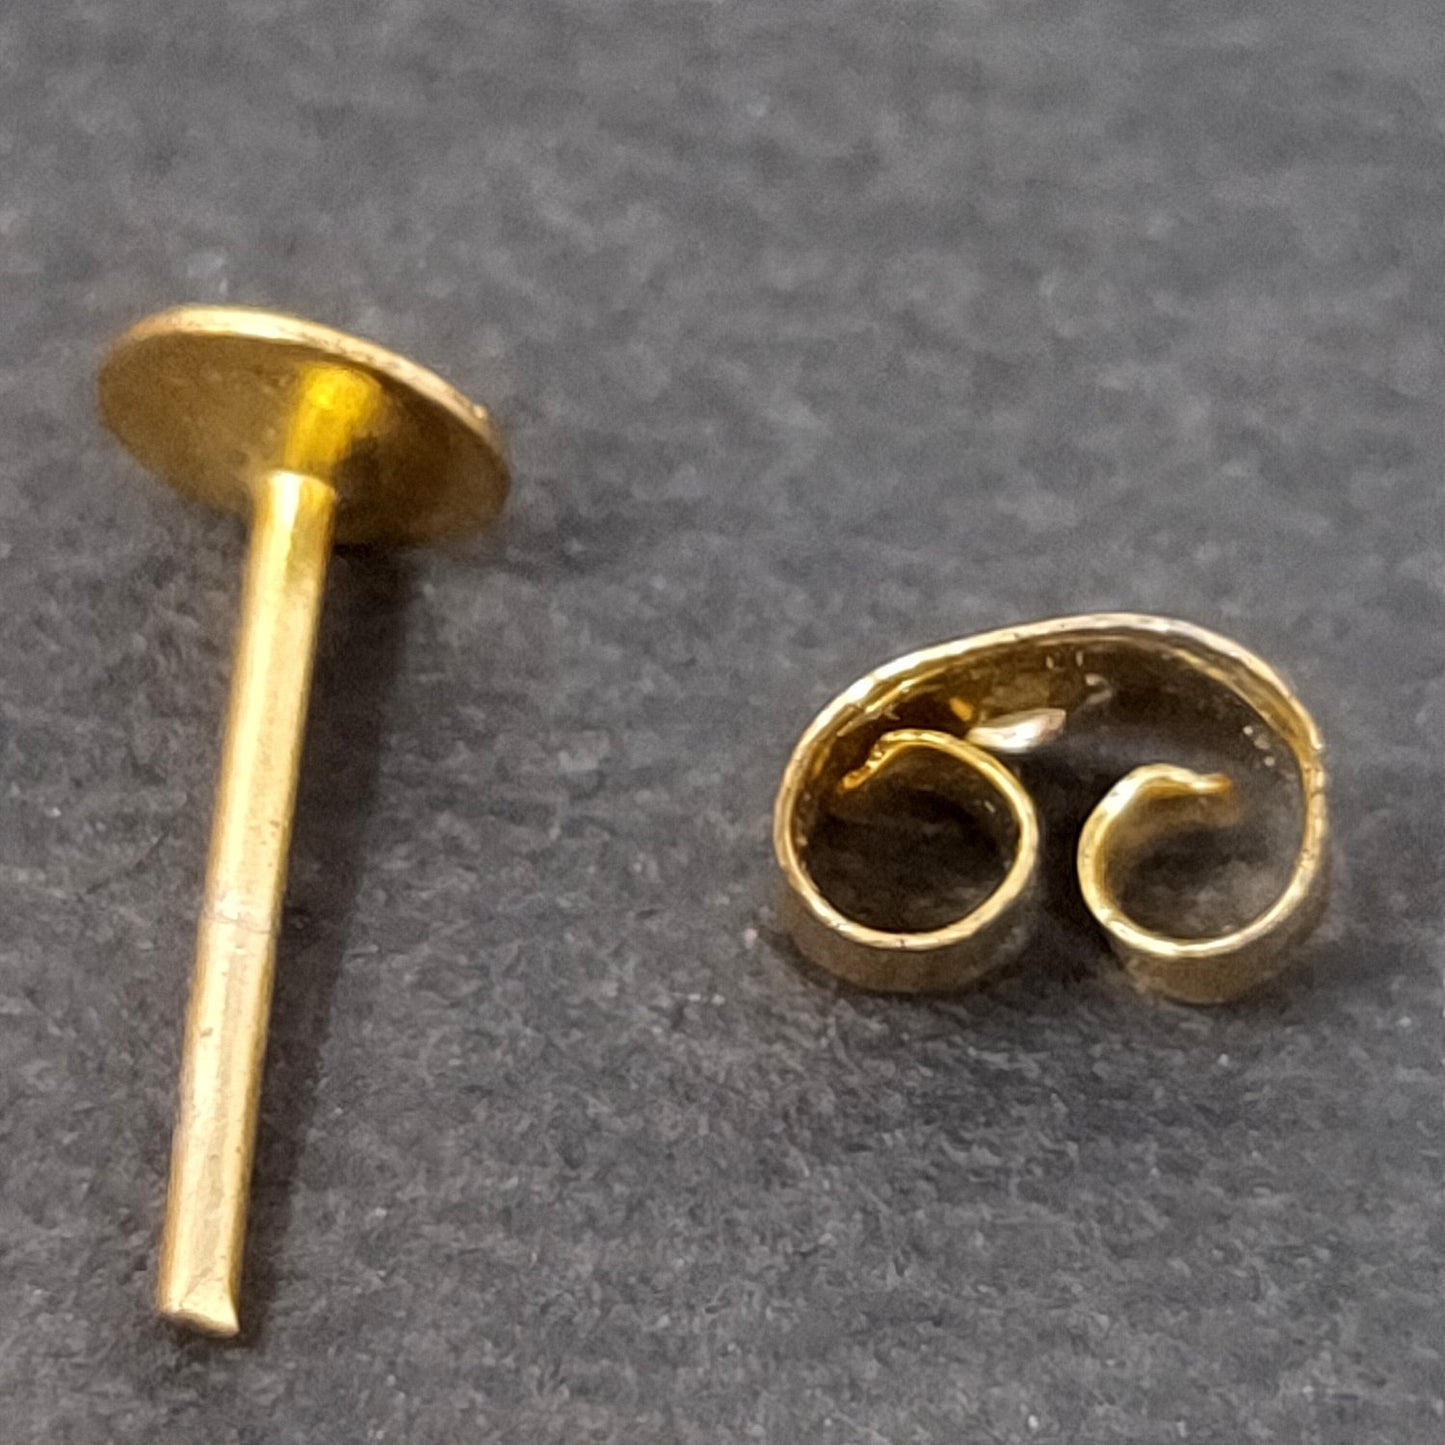 12 mm Golden Stud Head Pins with Brass Push lock Earring Back for Making Earrings (25 Pcs) - 96-28